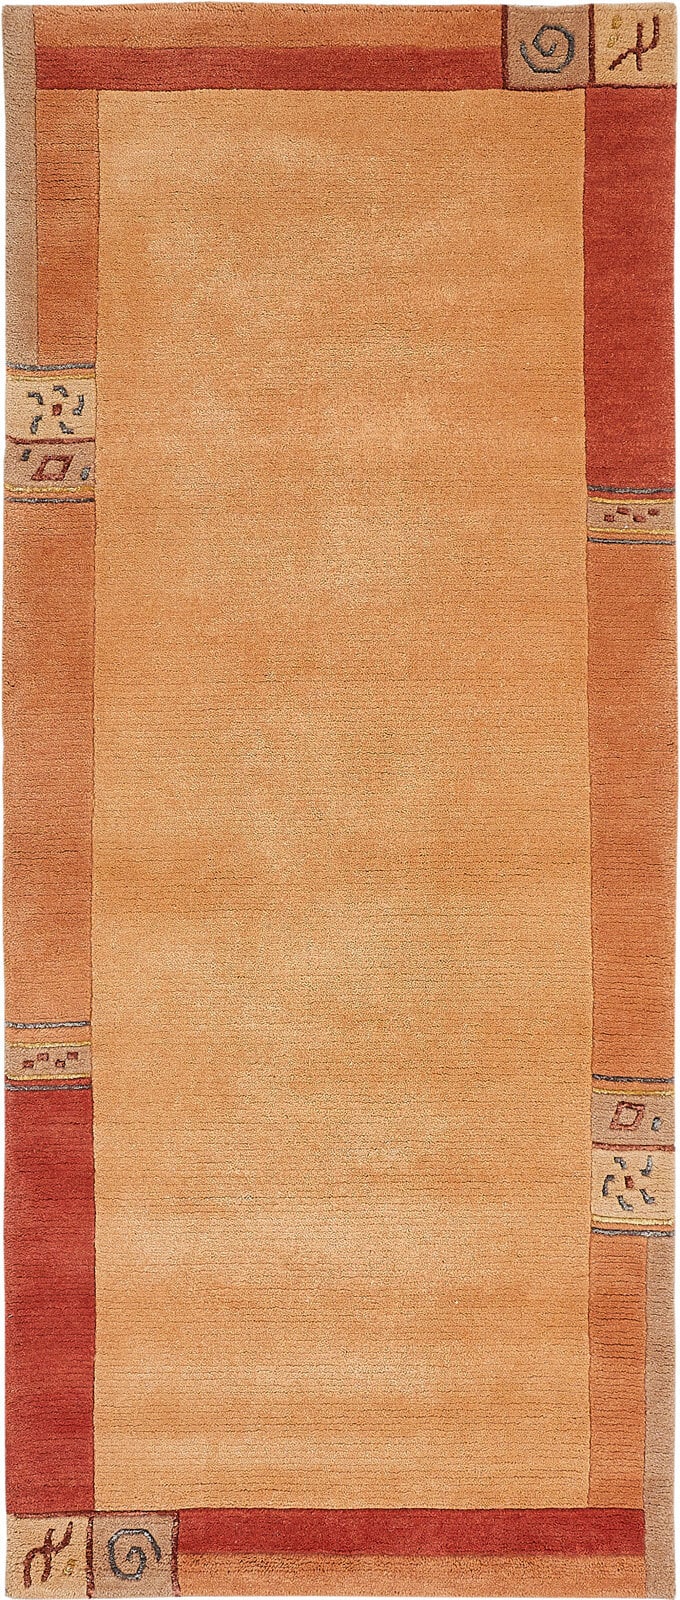 Teppich MANALI 80 x 300 cm orange